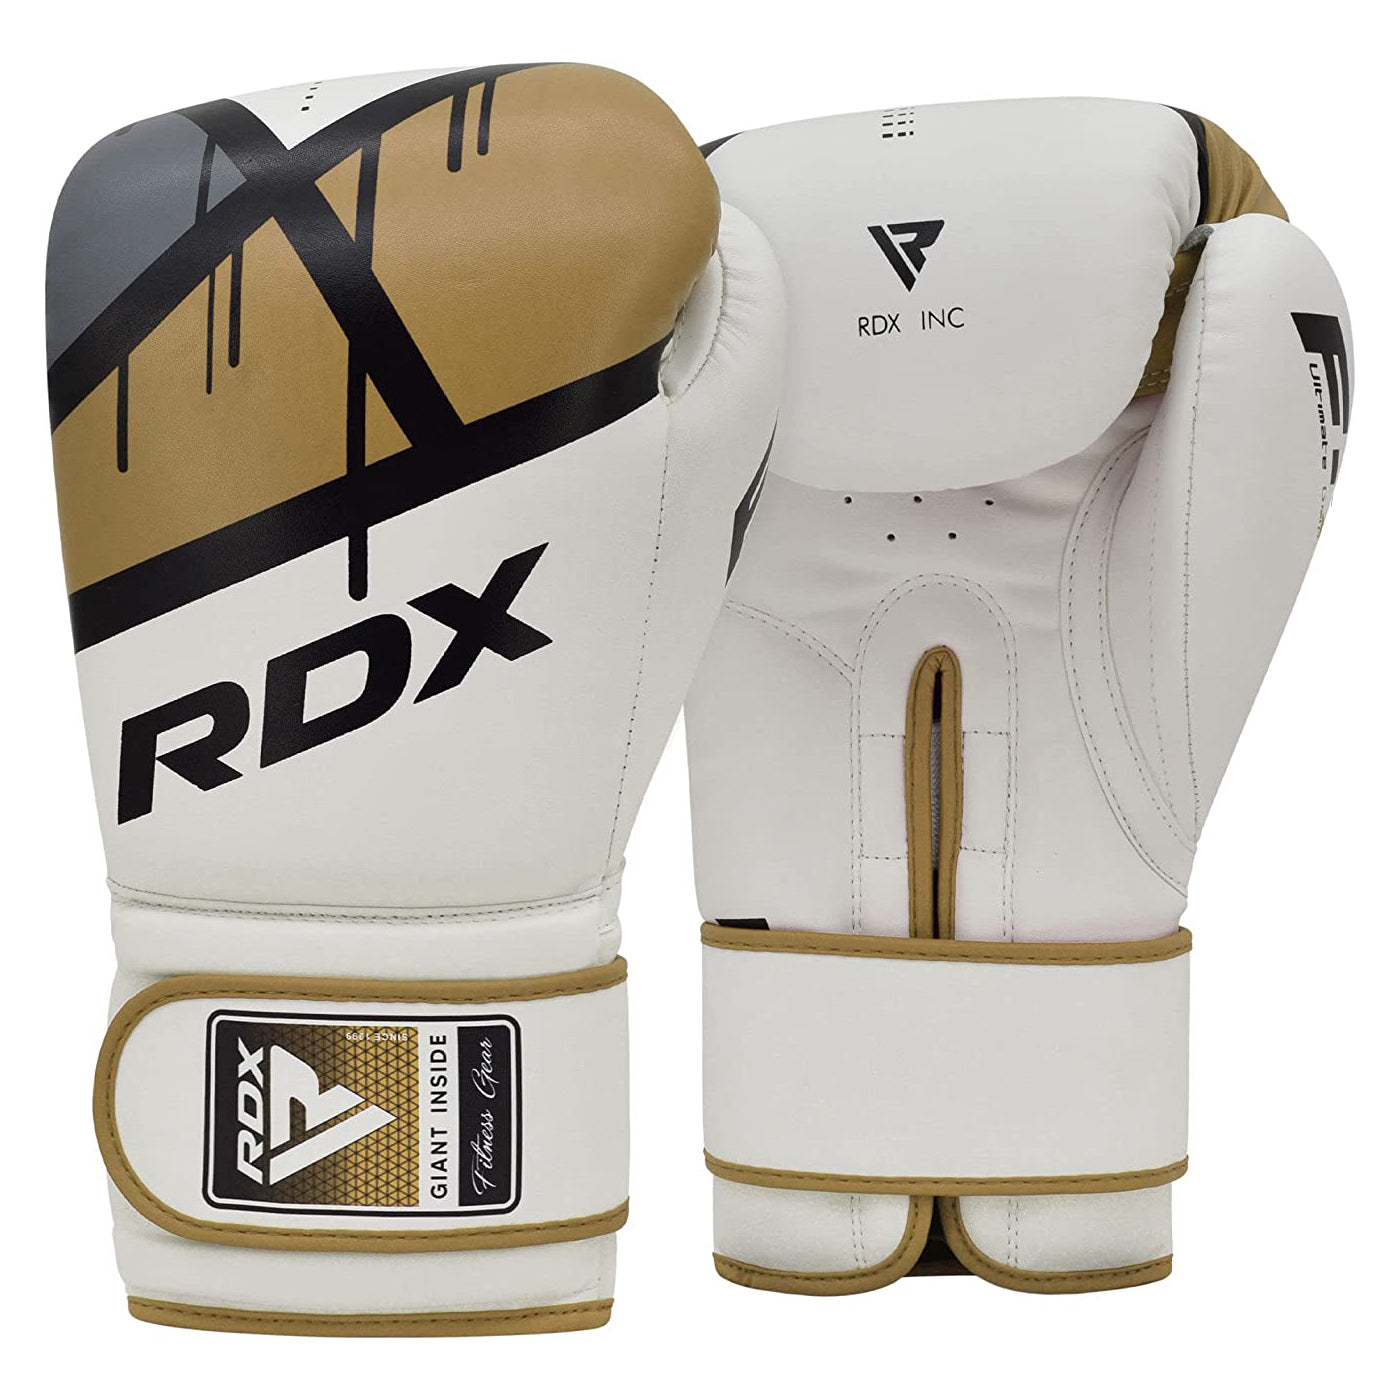 RDX F7 EGO MMA, BJJ, Muay Thai, Kickboxing, Training Boxing Gloves - GOLDEN - 14OZ - Pro-Distributing